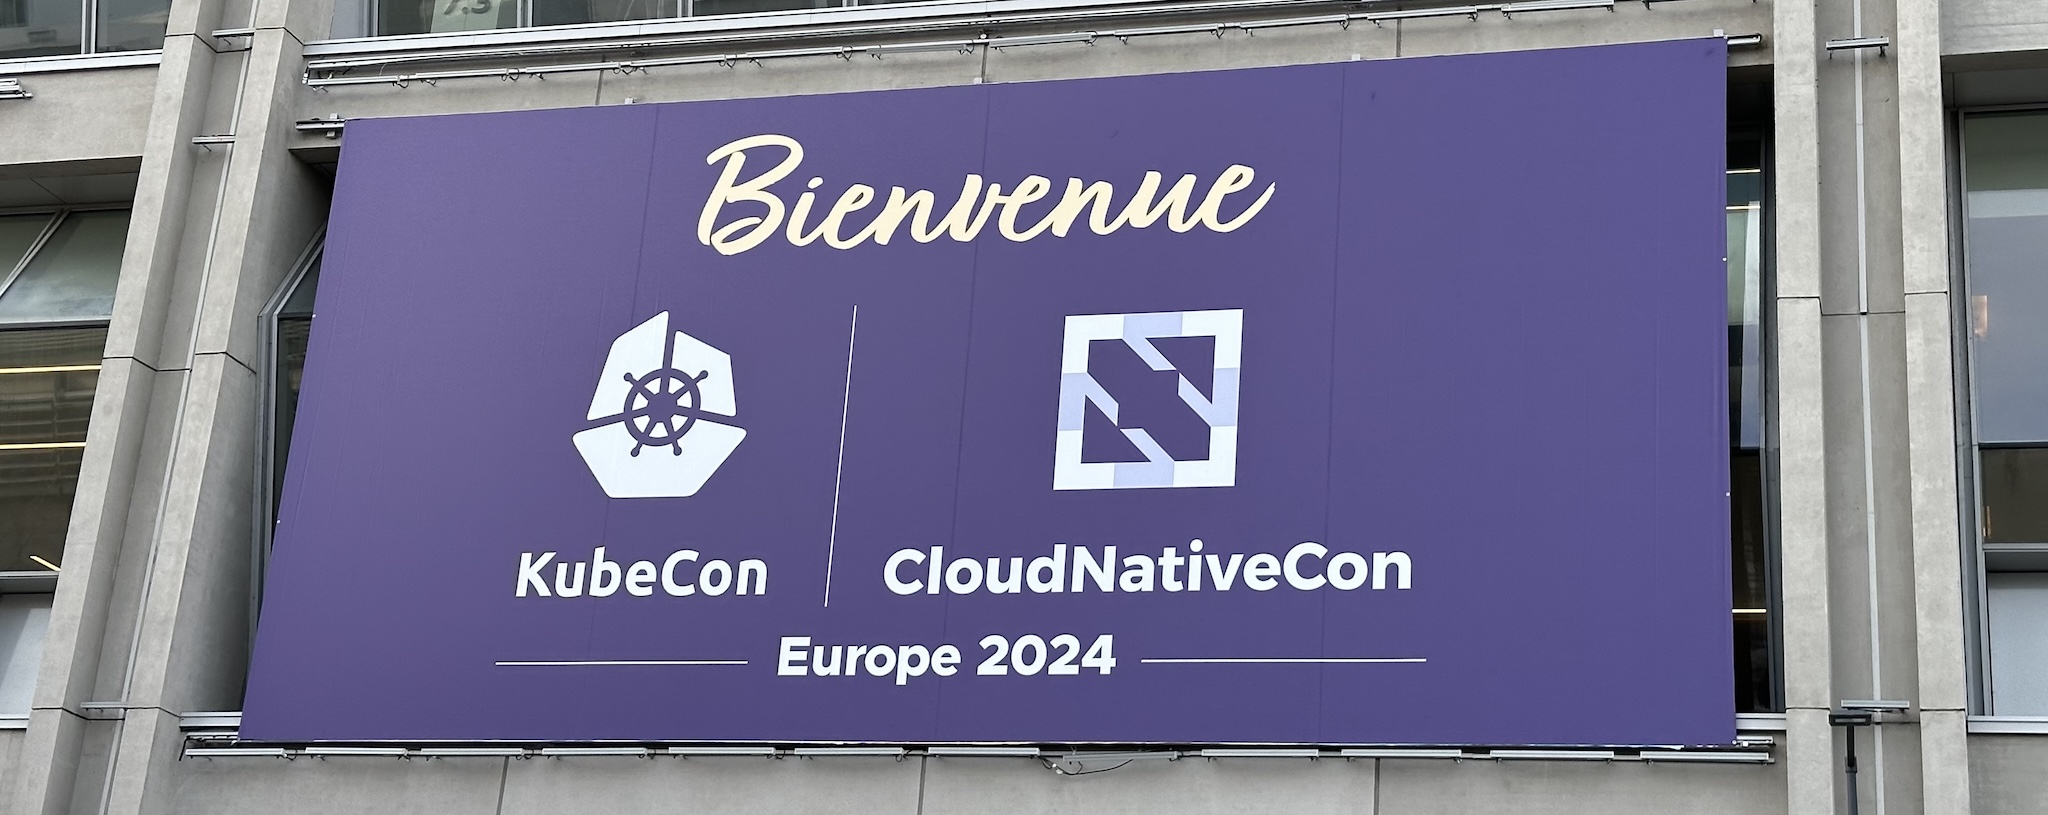 KubeCon Europe 2024, Paris